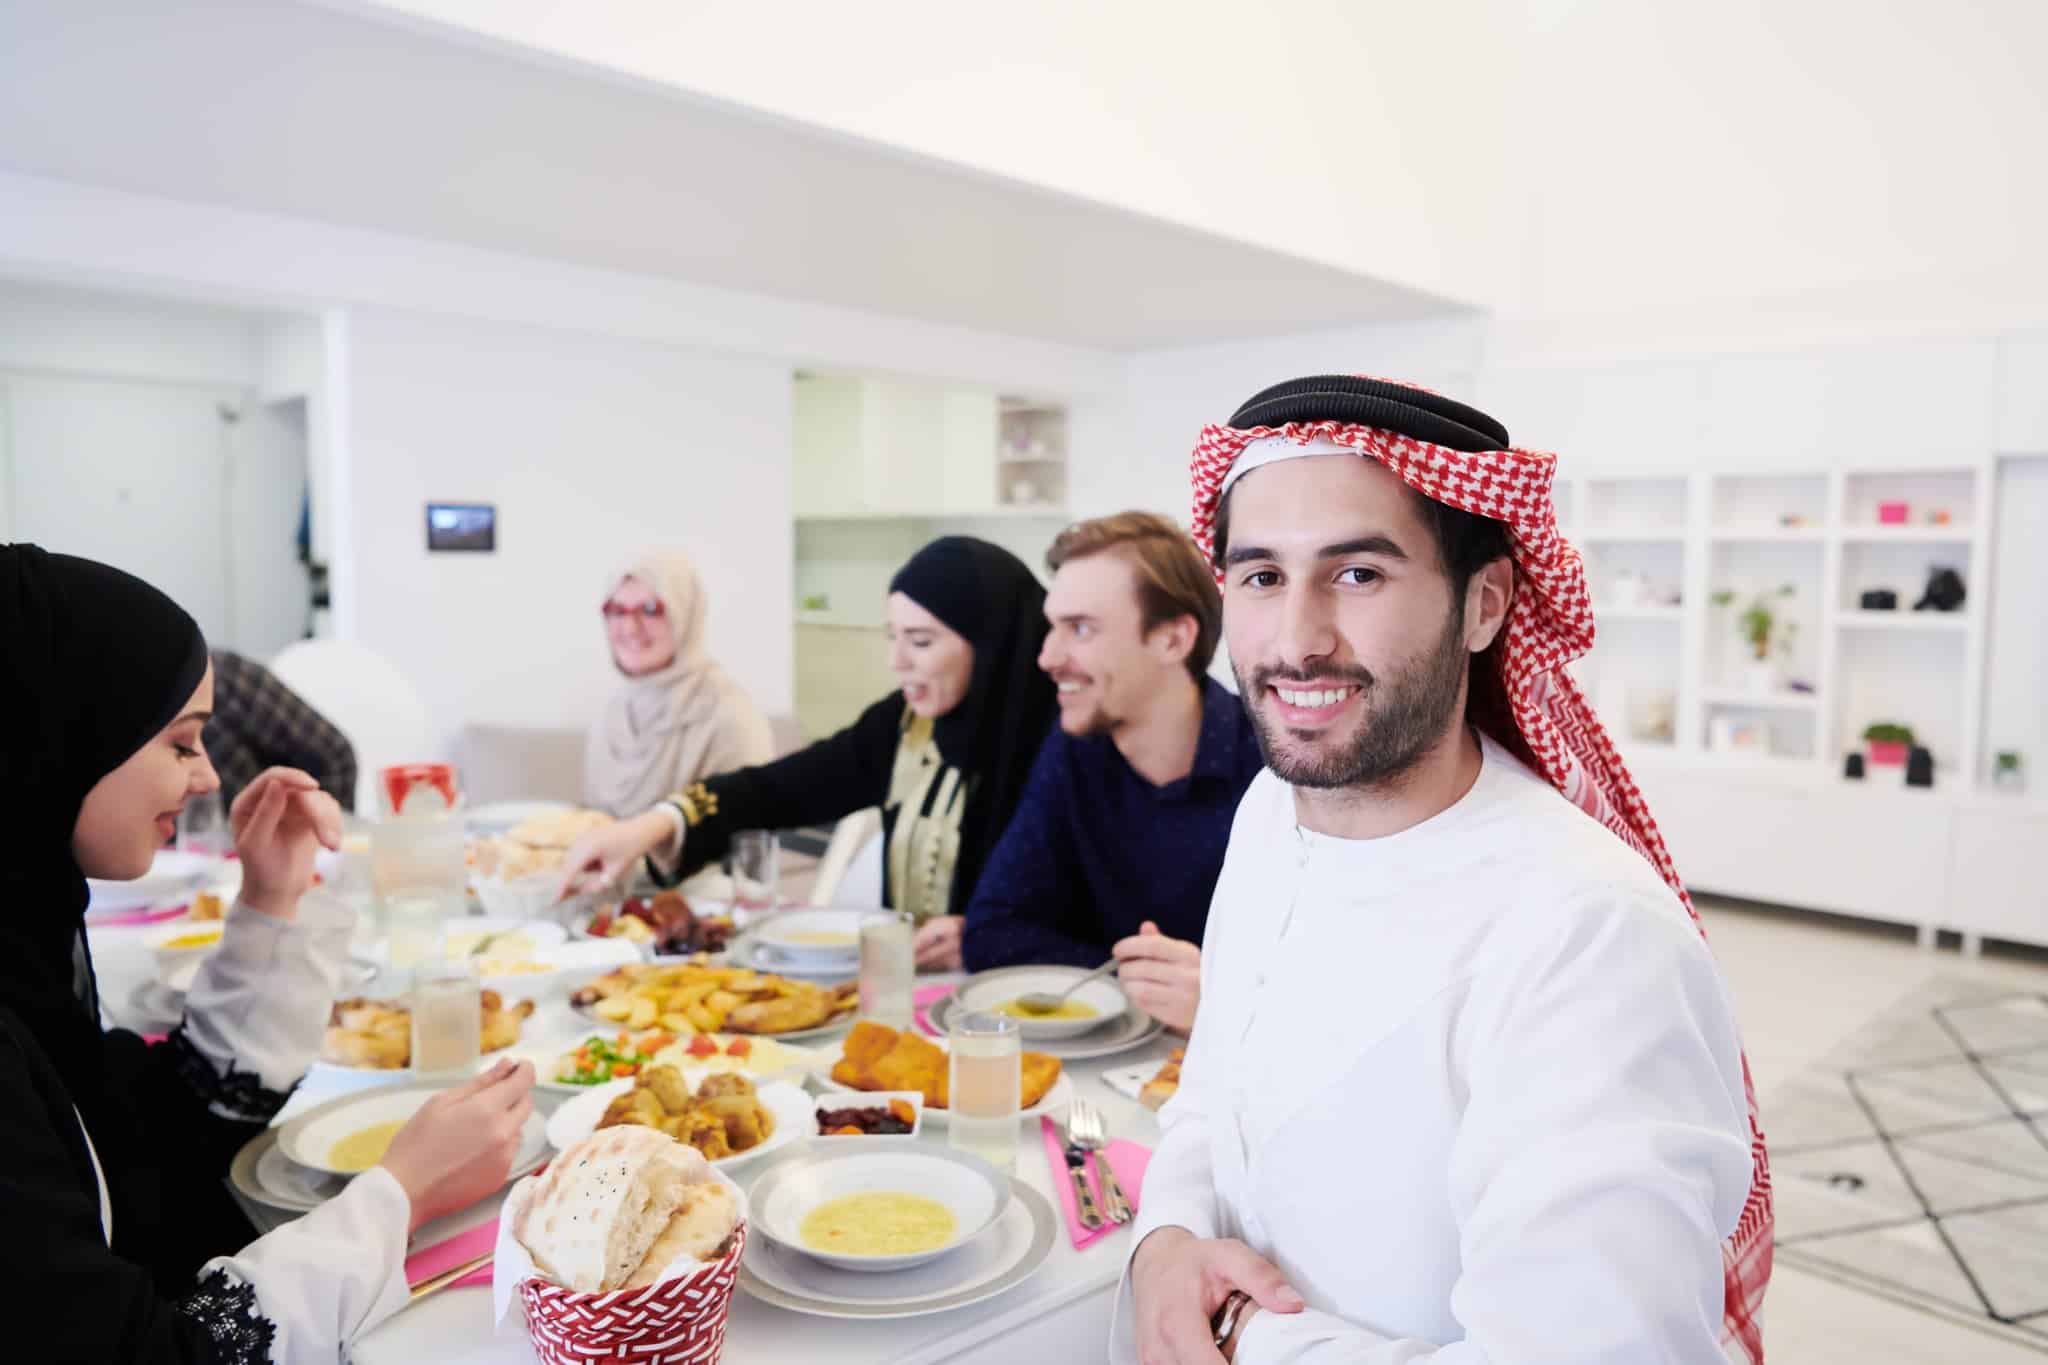 KSA sets a fine of 10,000 riyals for large family gatherings